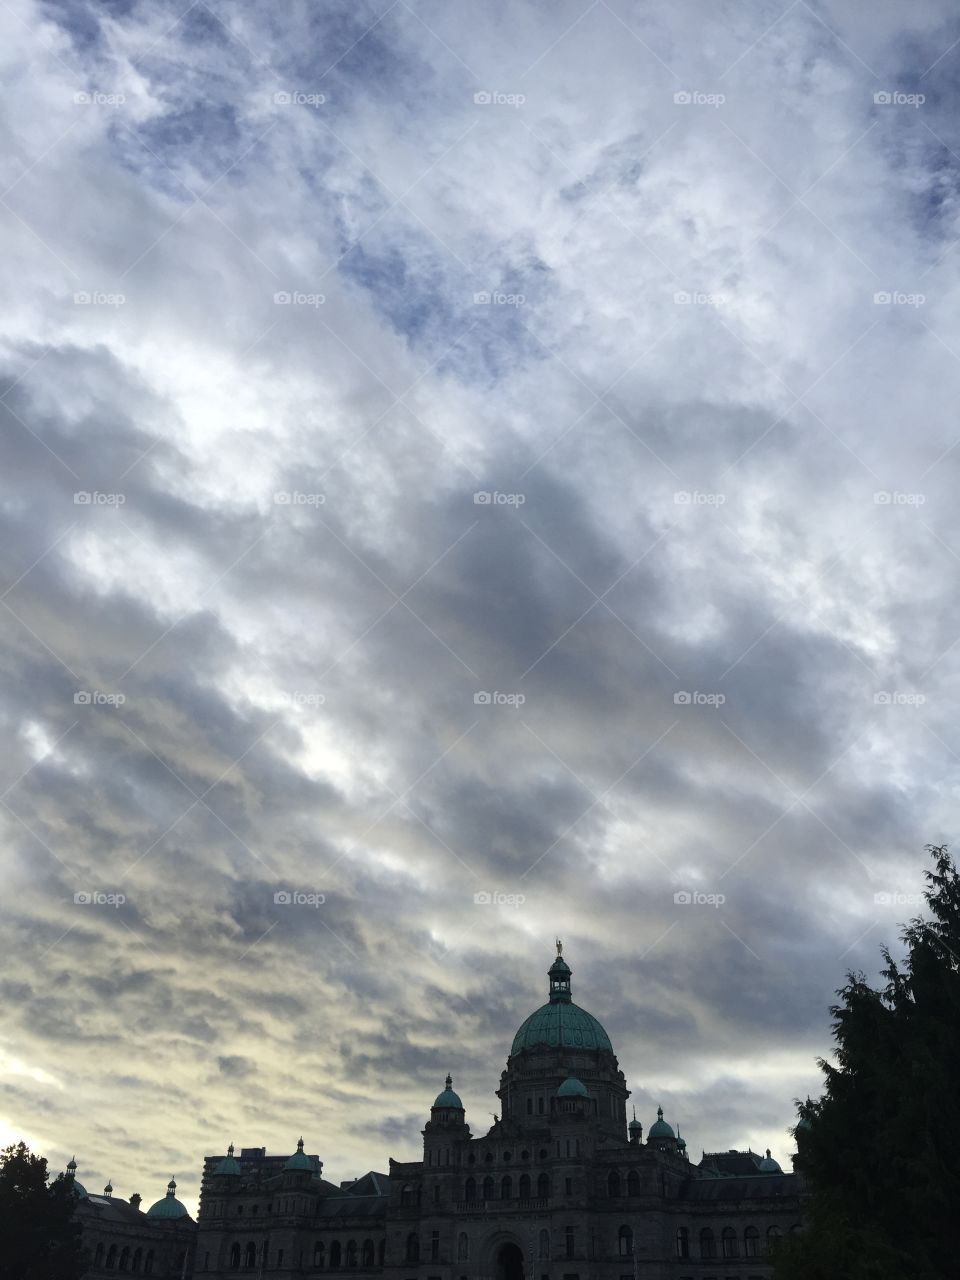 A storm on parliament hill #parliamentbuildings #sky #storm #clouds #government 